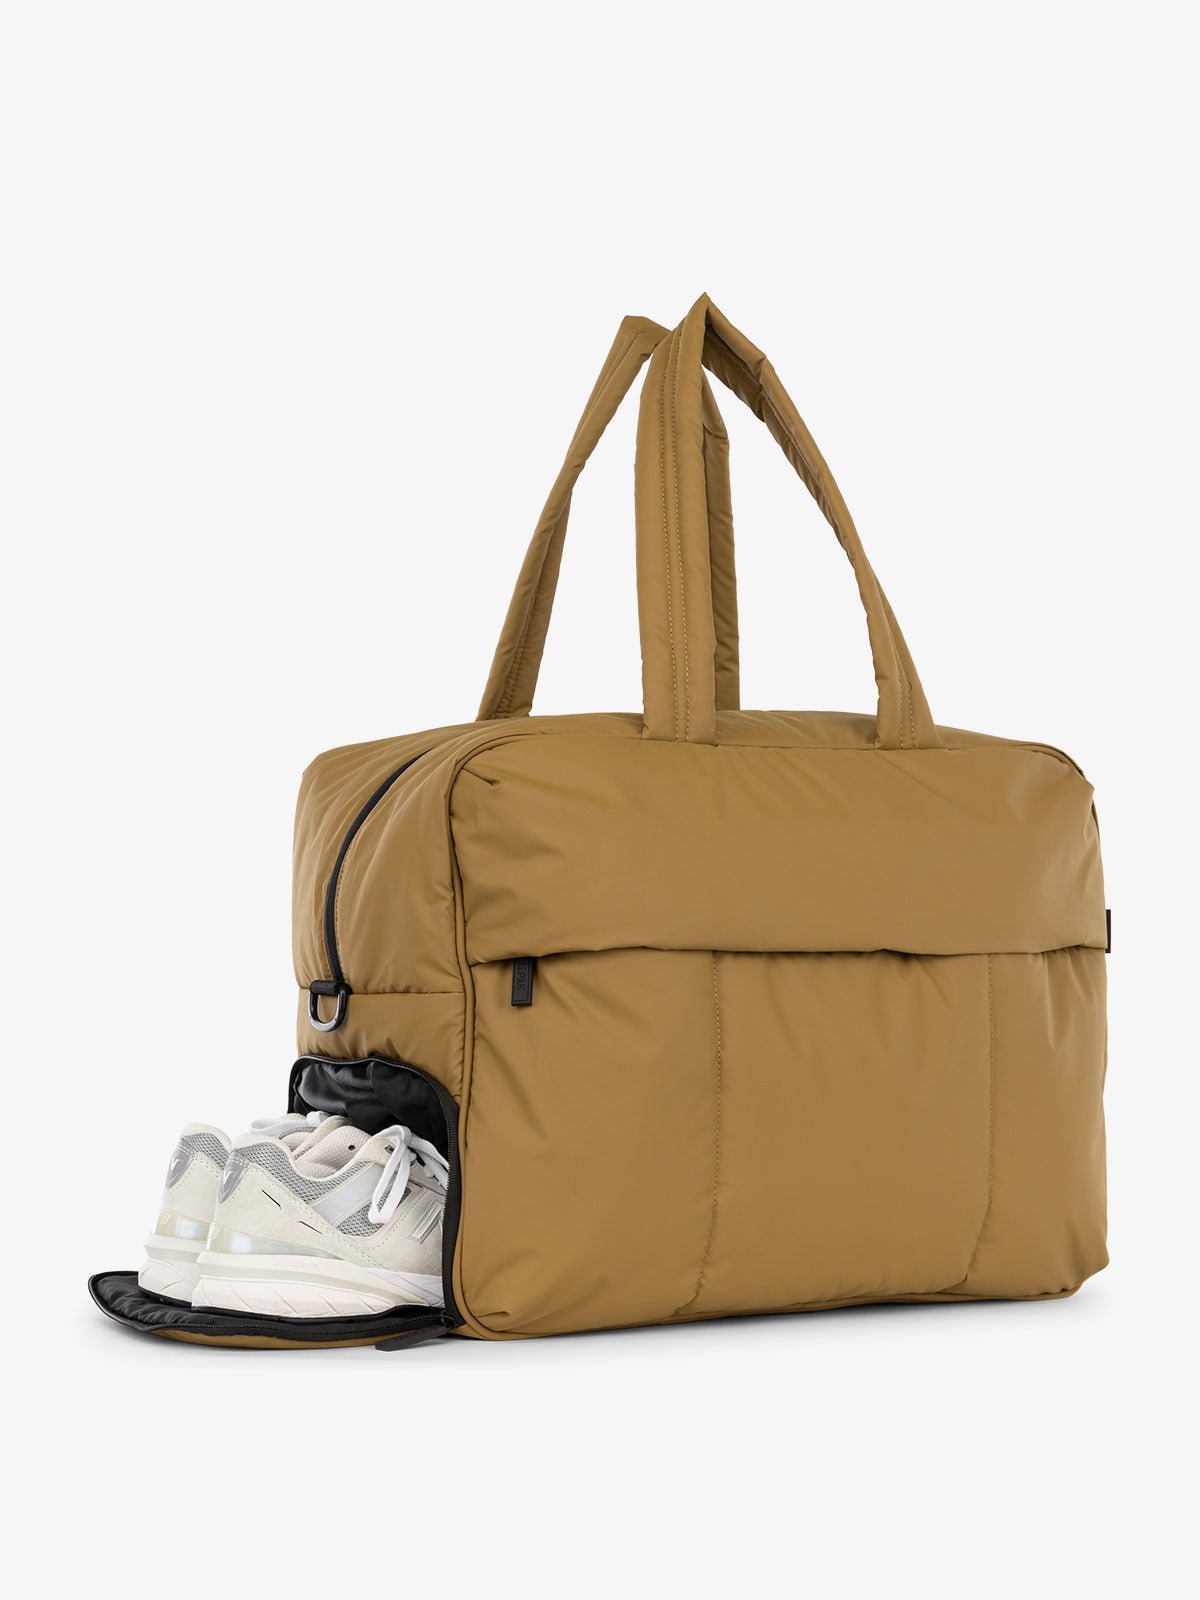 CALPAK Luka large duffel bag with side shoe compartment and dual handles in khaki tan